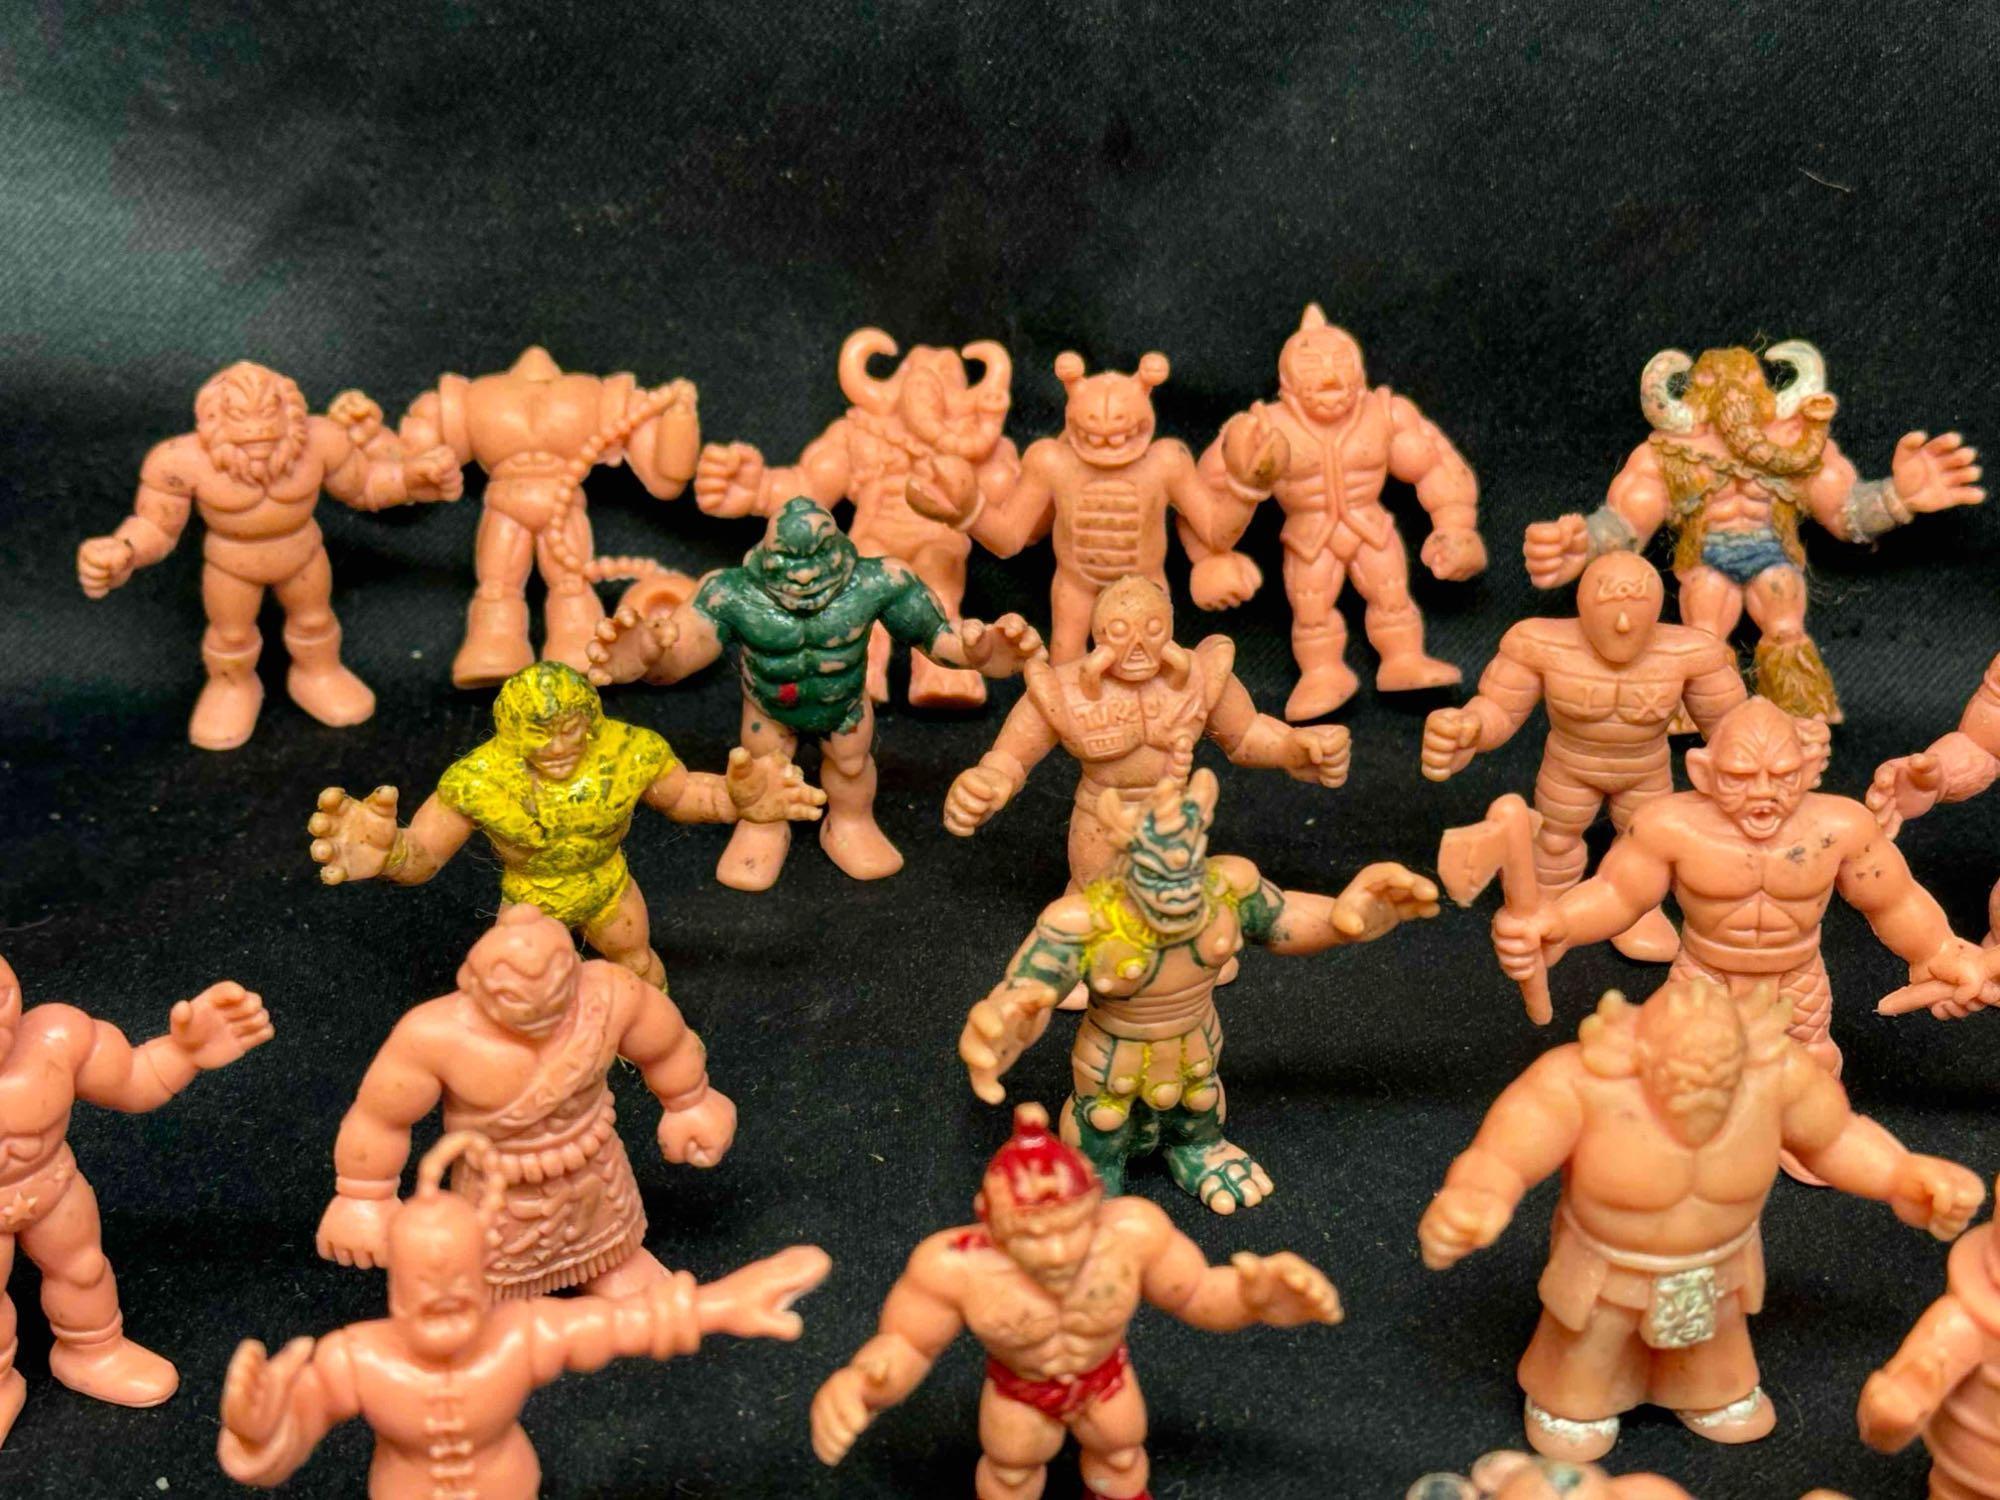 Over 90 1980s Vintage Mattel M.U.S.C.L.E. Muscle figures Kinnikuman little pink men anime